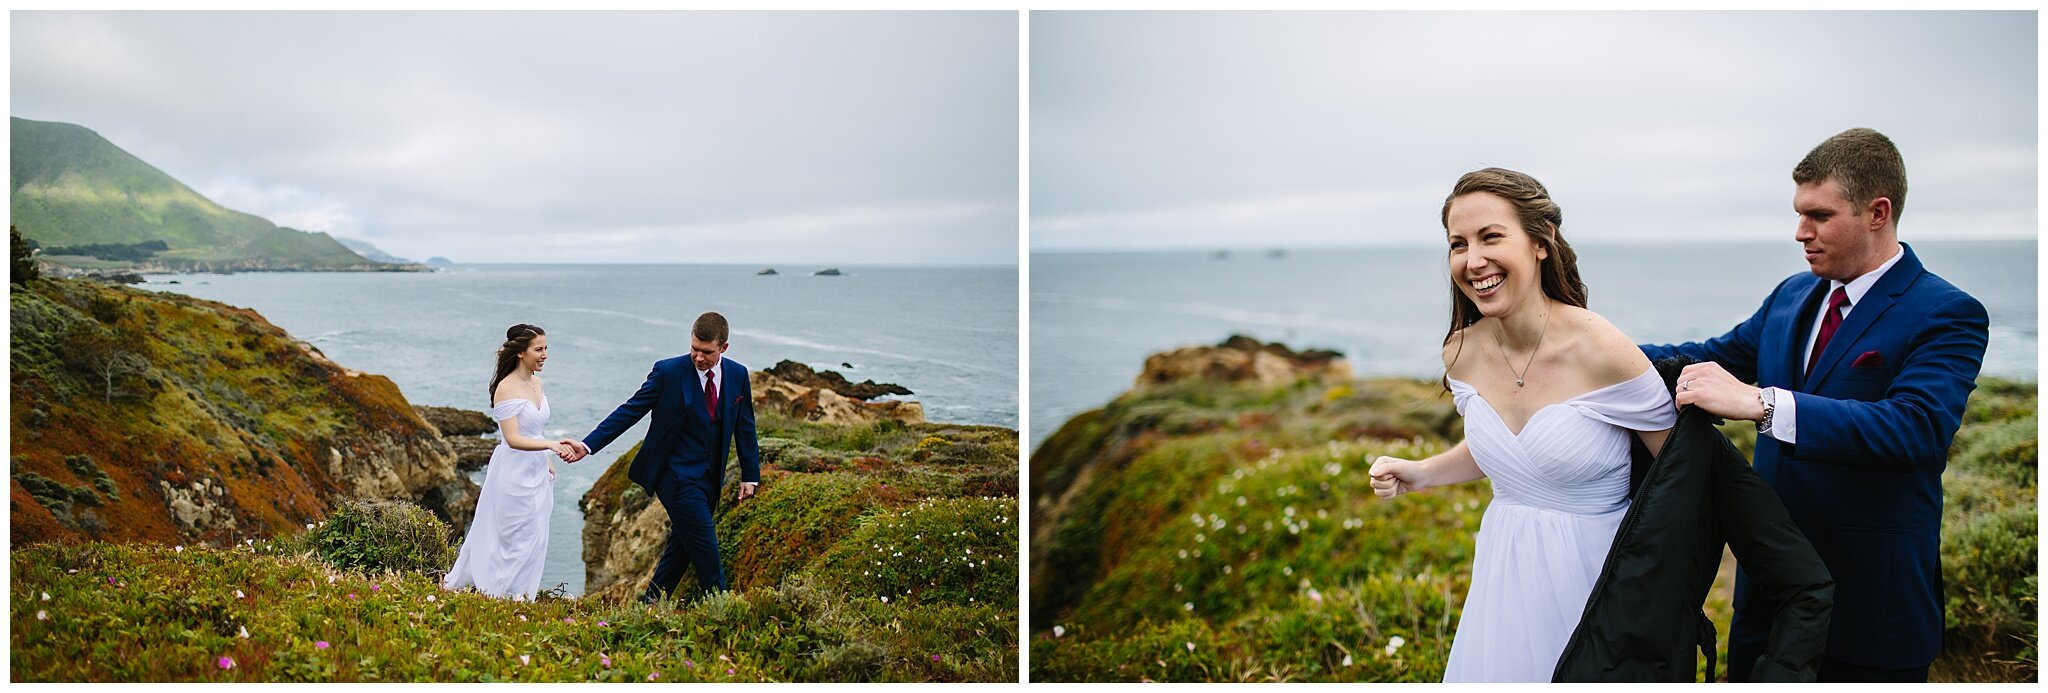 Big Sur - Elopement - Photographer - Rebecca and Tyler - Adventure Wedding Photographer_0070.jpg